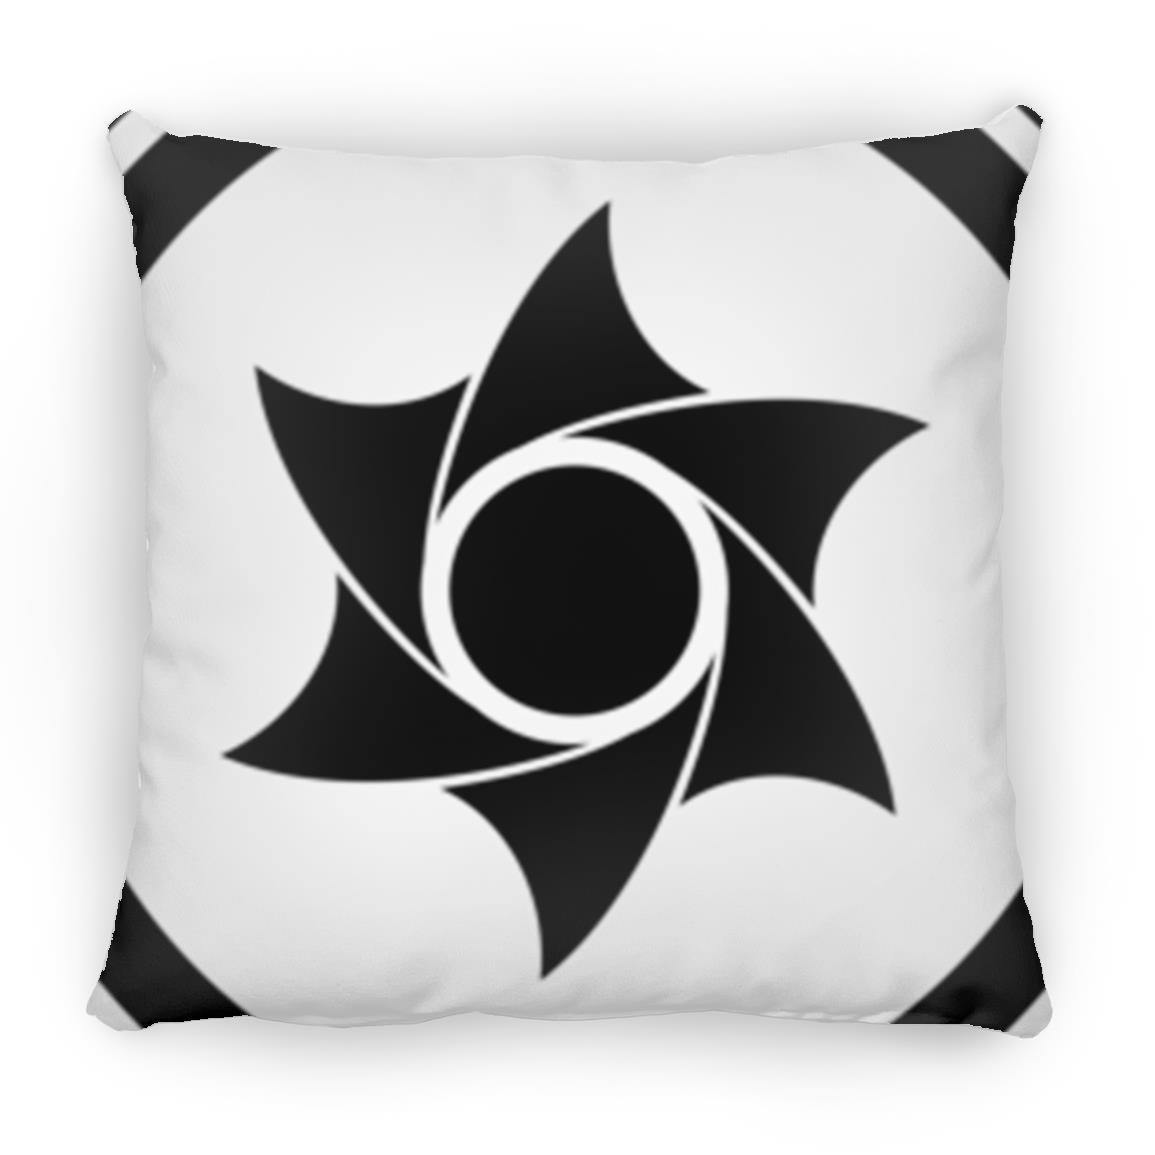 Crop Circle Pillow - Etchilhampton 2 - Shapes of Wisdom